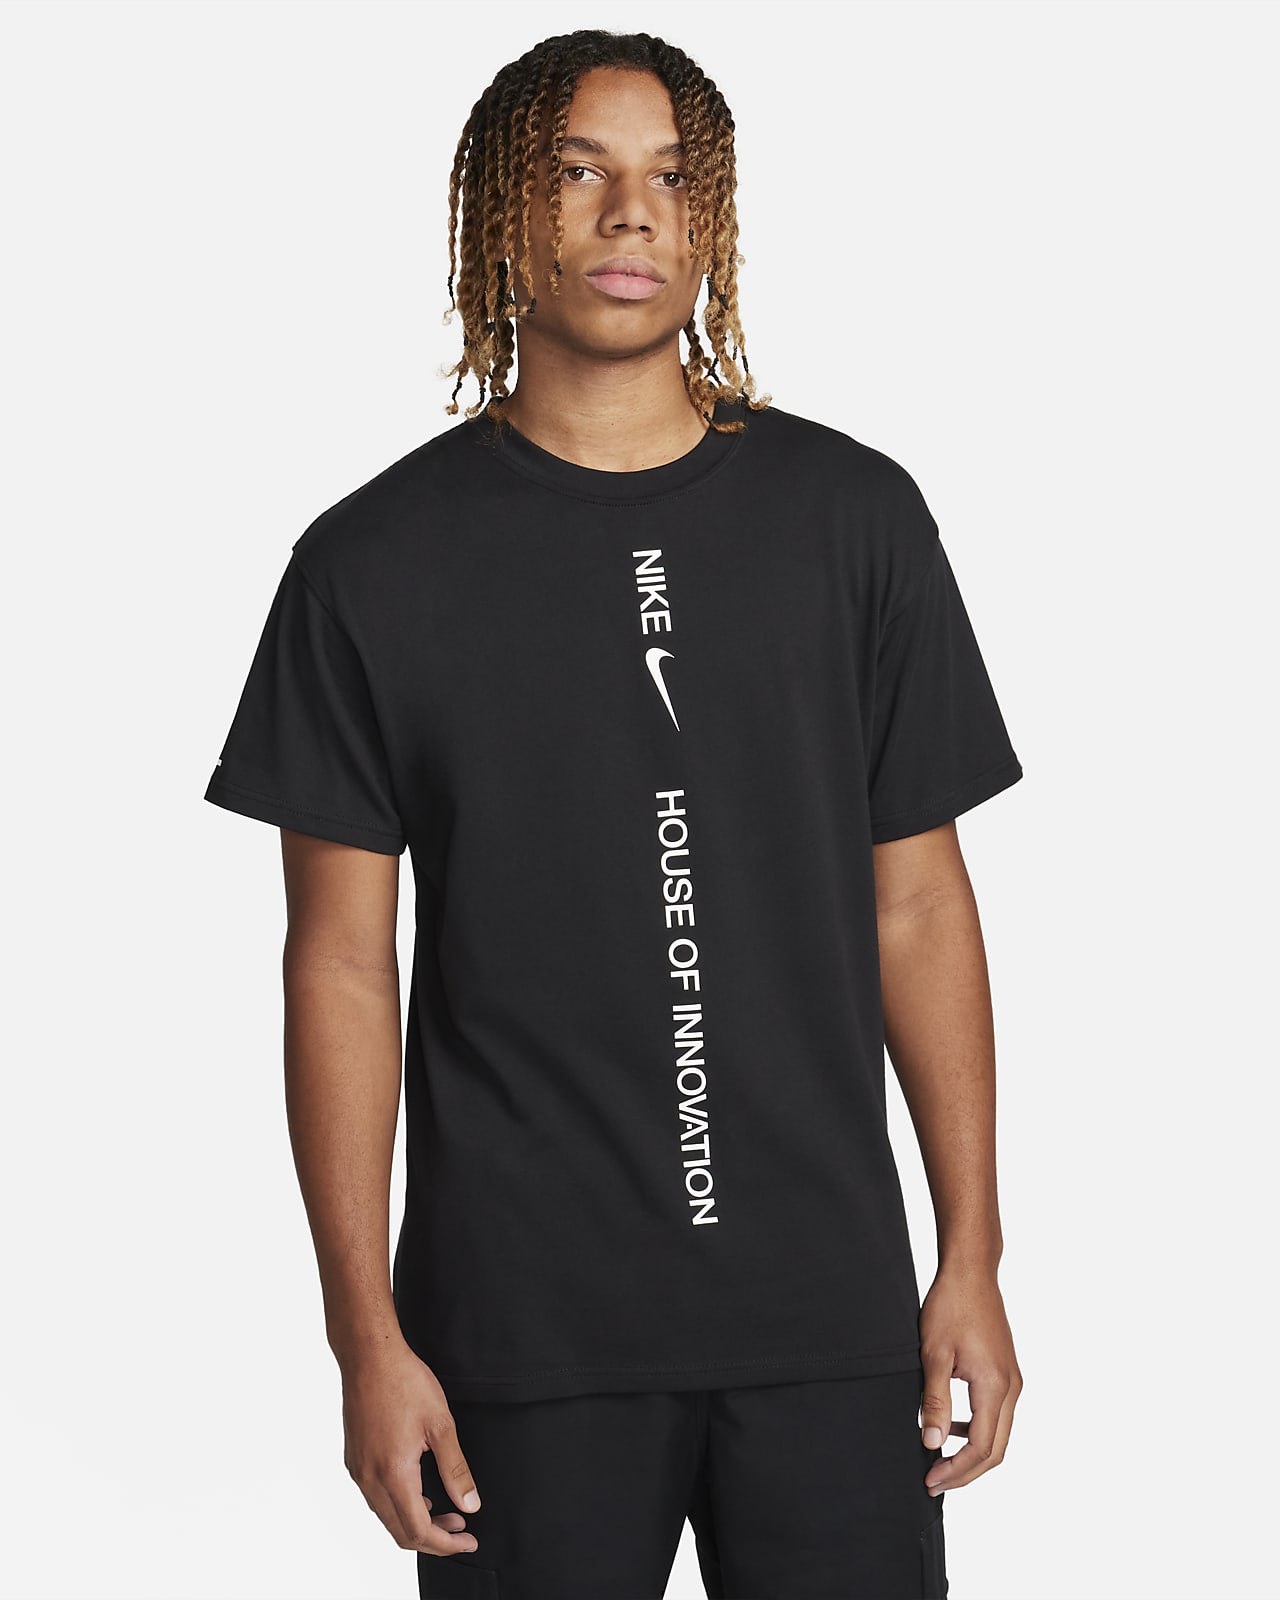 Nike Sportswear House of Innovation (Paris) Camiseta - Hombre